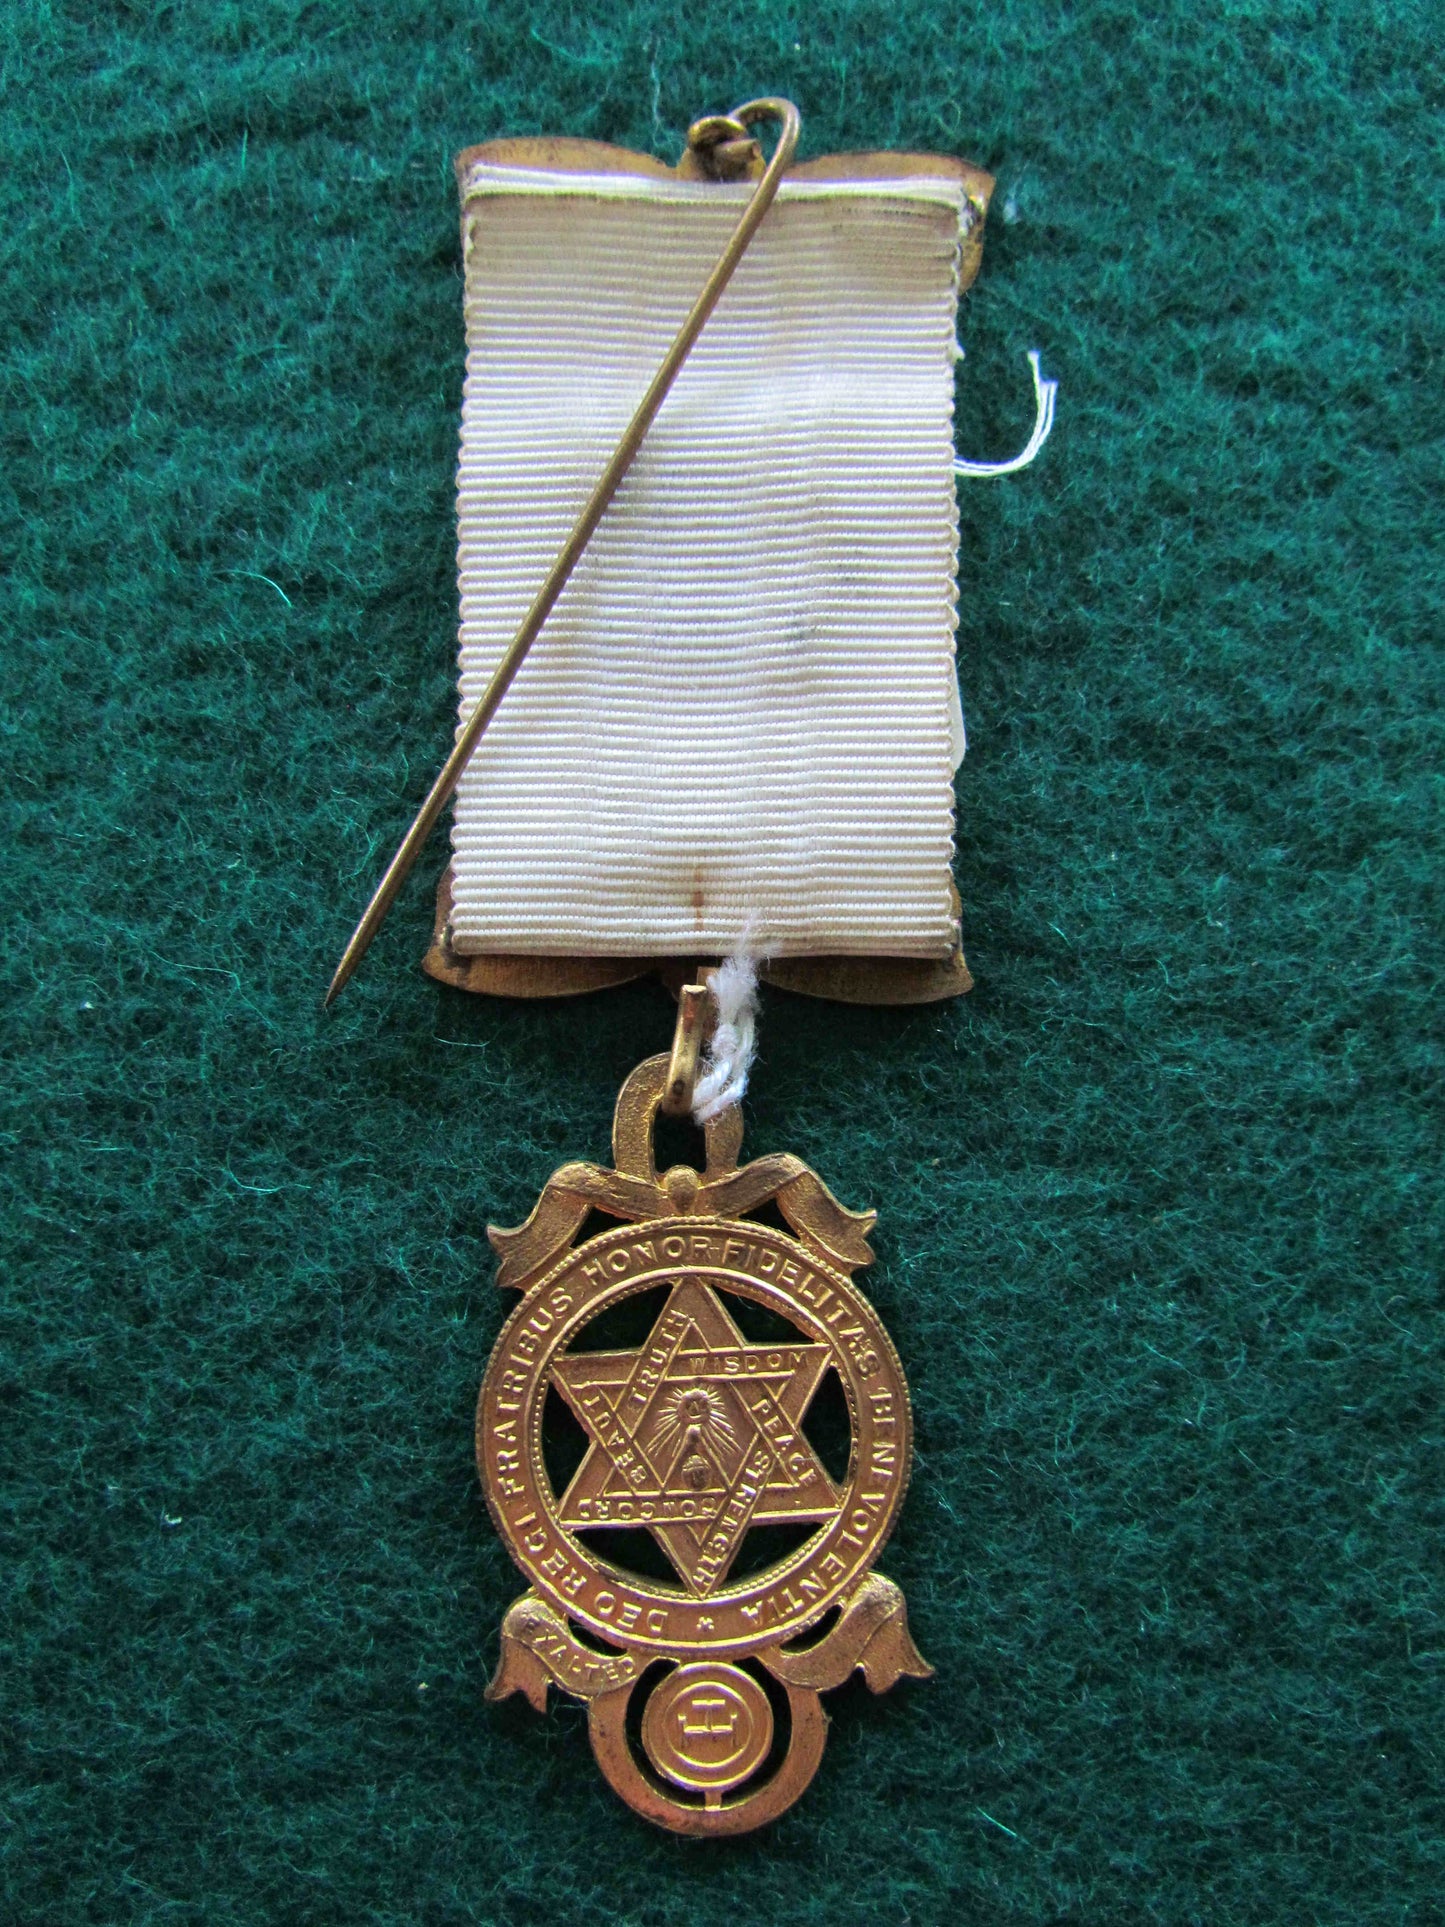 Masons Gold Plated Royal Arch Companion Breast Jewel